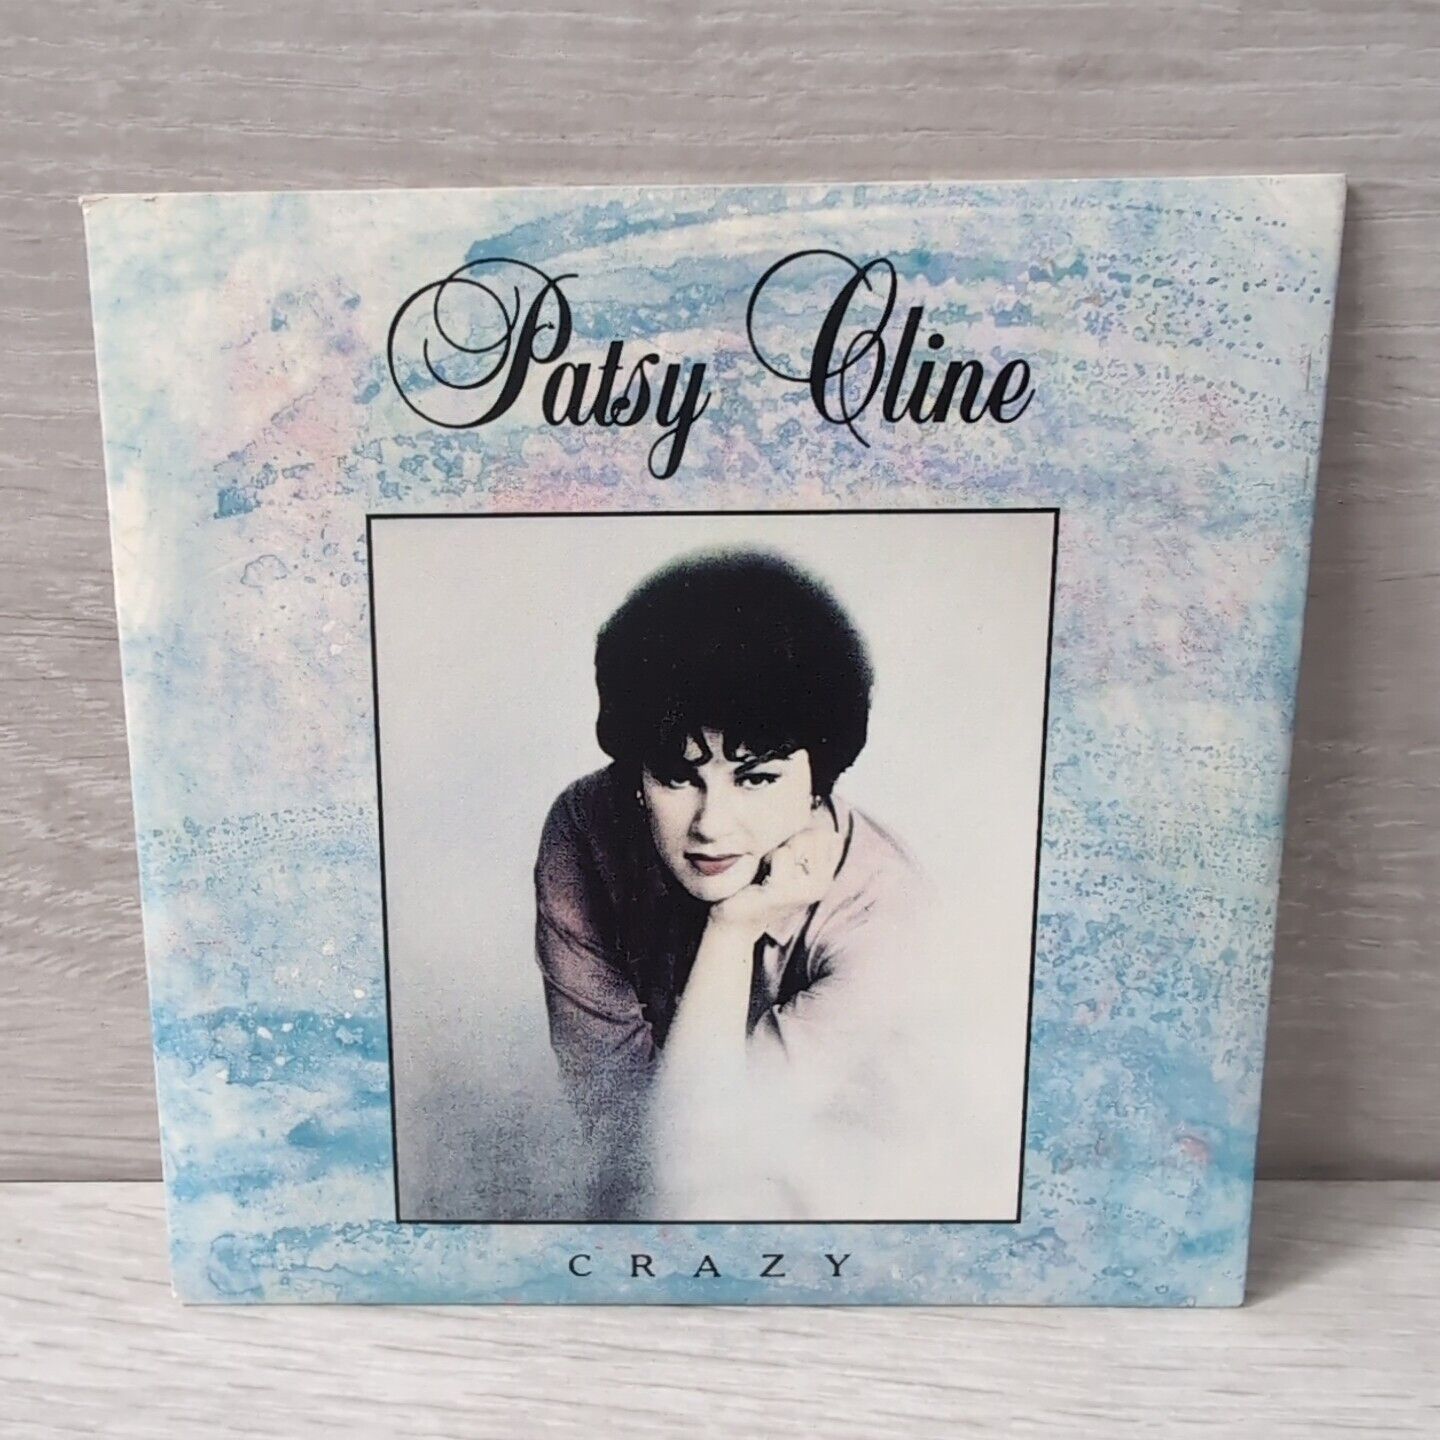 Patsy Cline - Crazy - CD Single - DMCAT 1465 - 1990 - MCA Record - VG Condition 